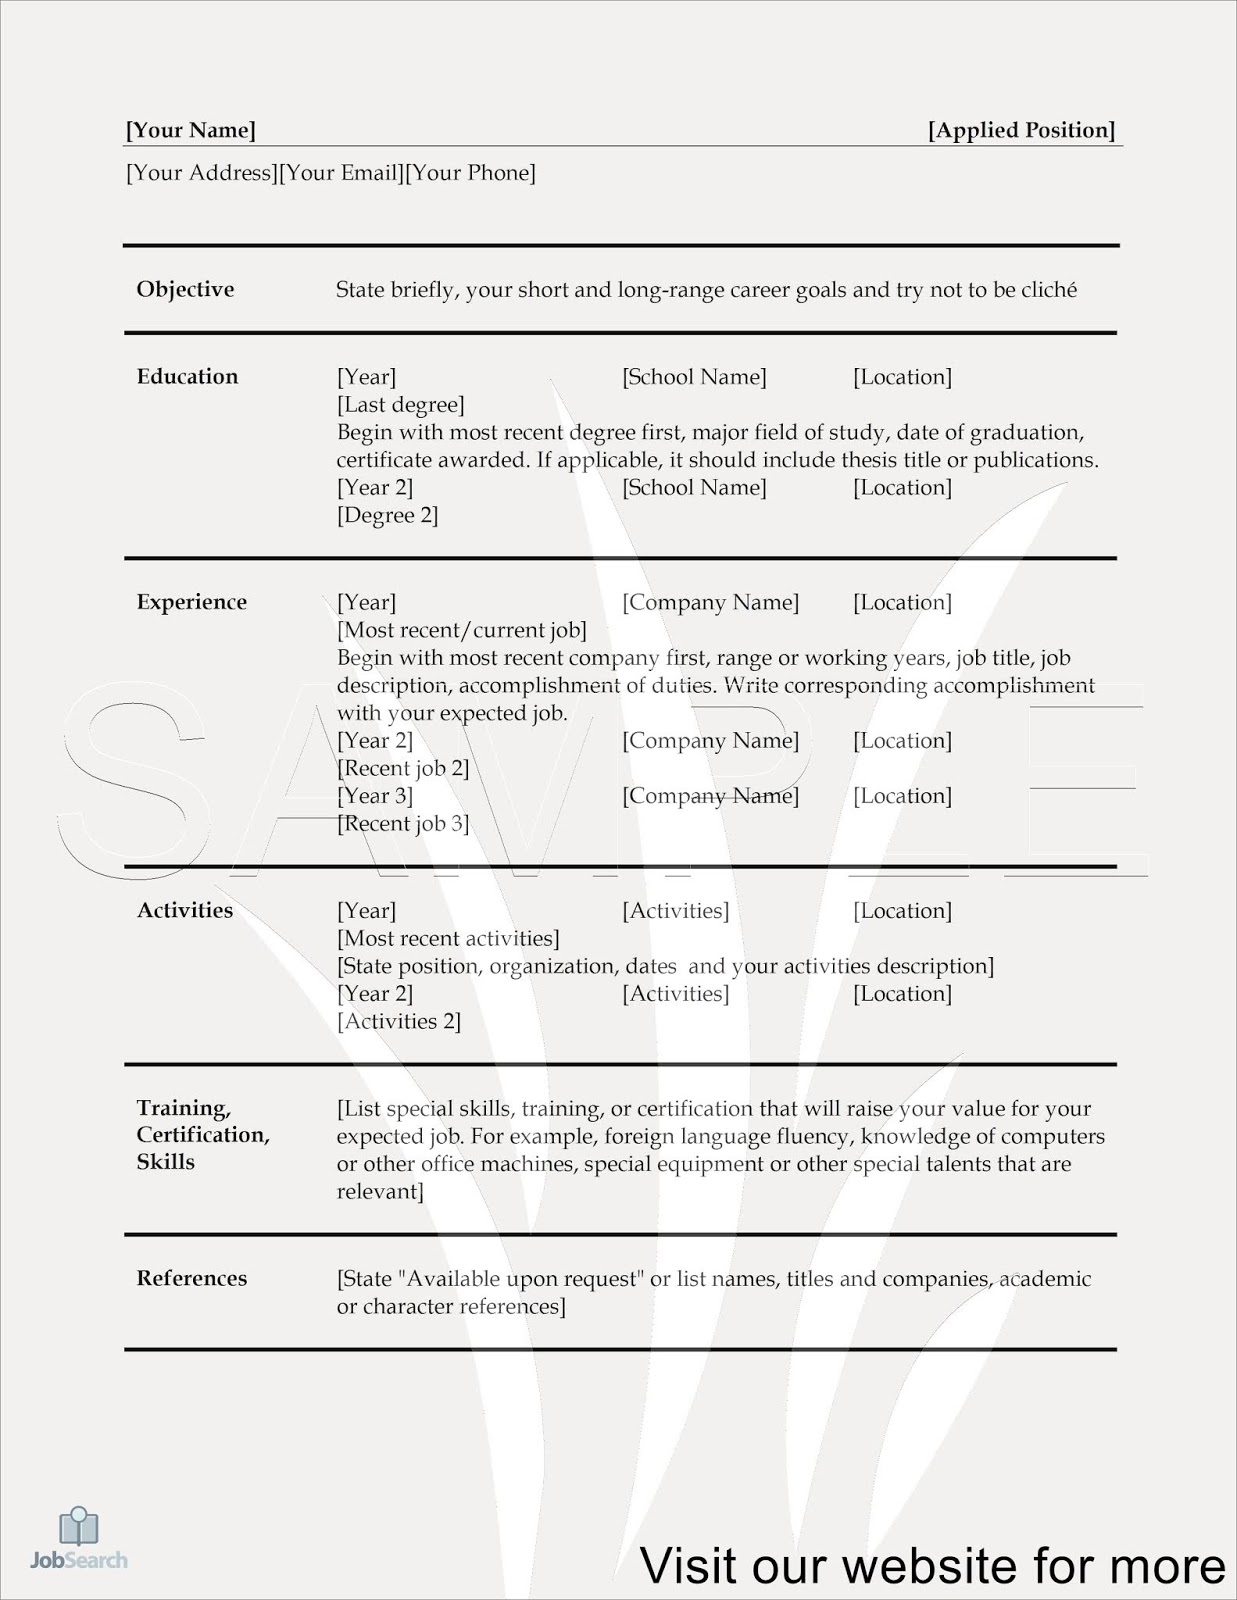 resume format free download resume format free download australia resume format free download in ms word